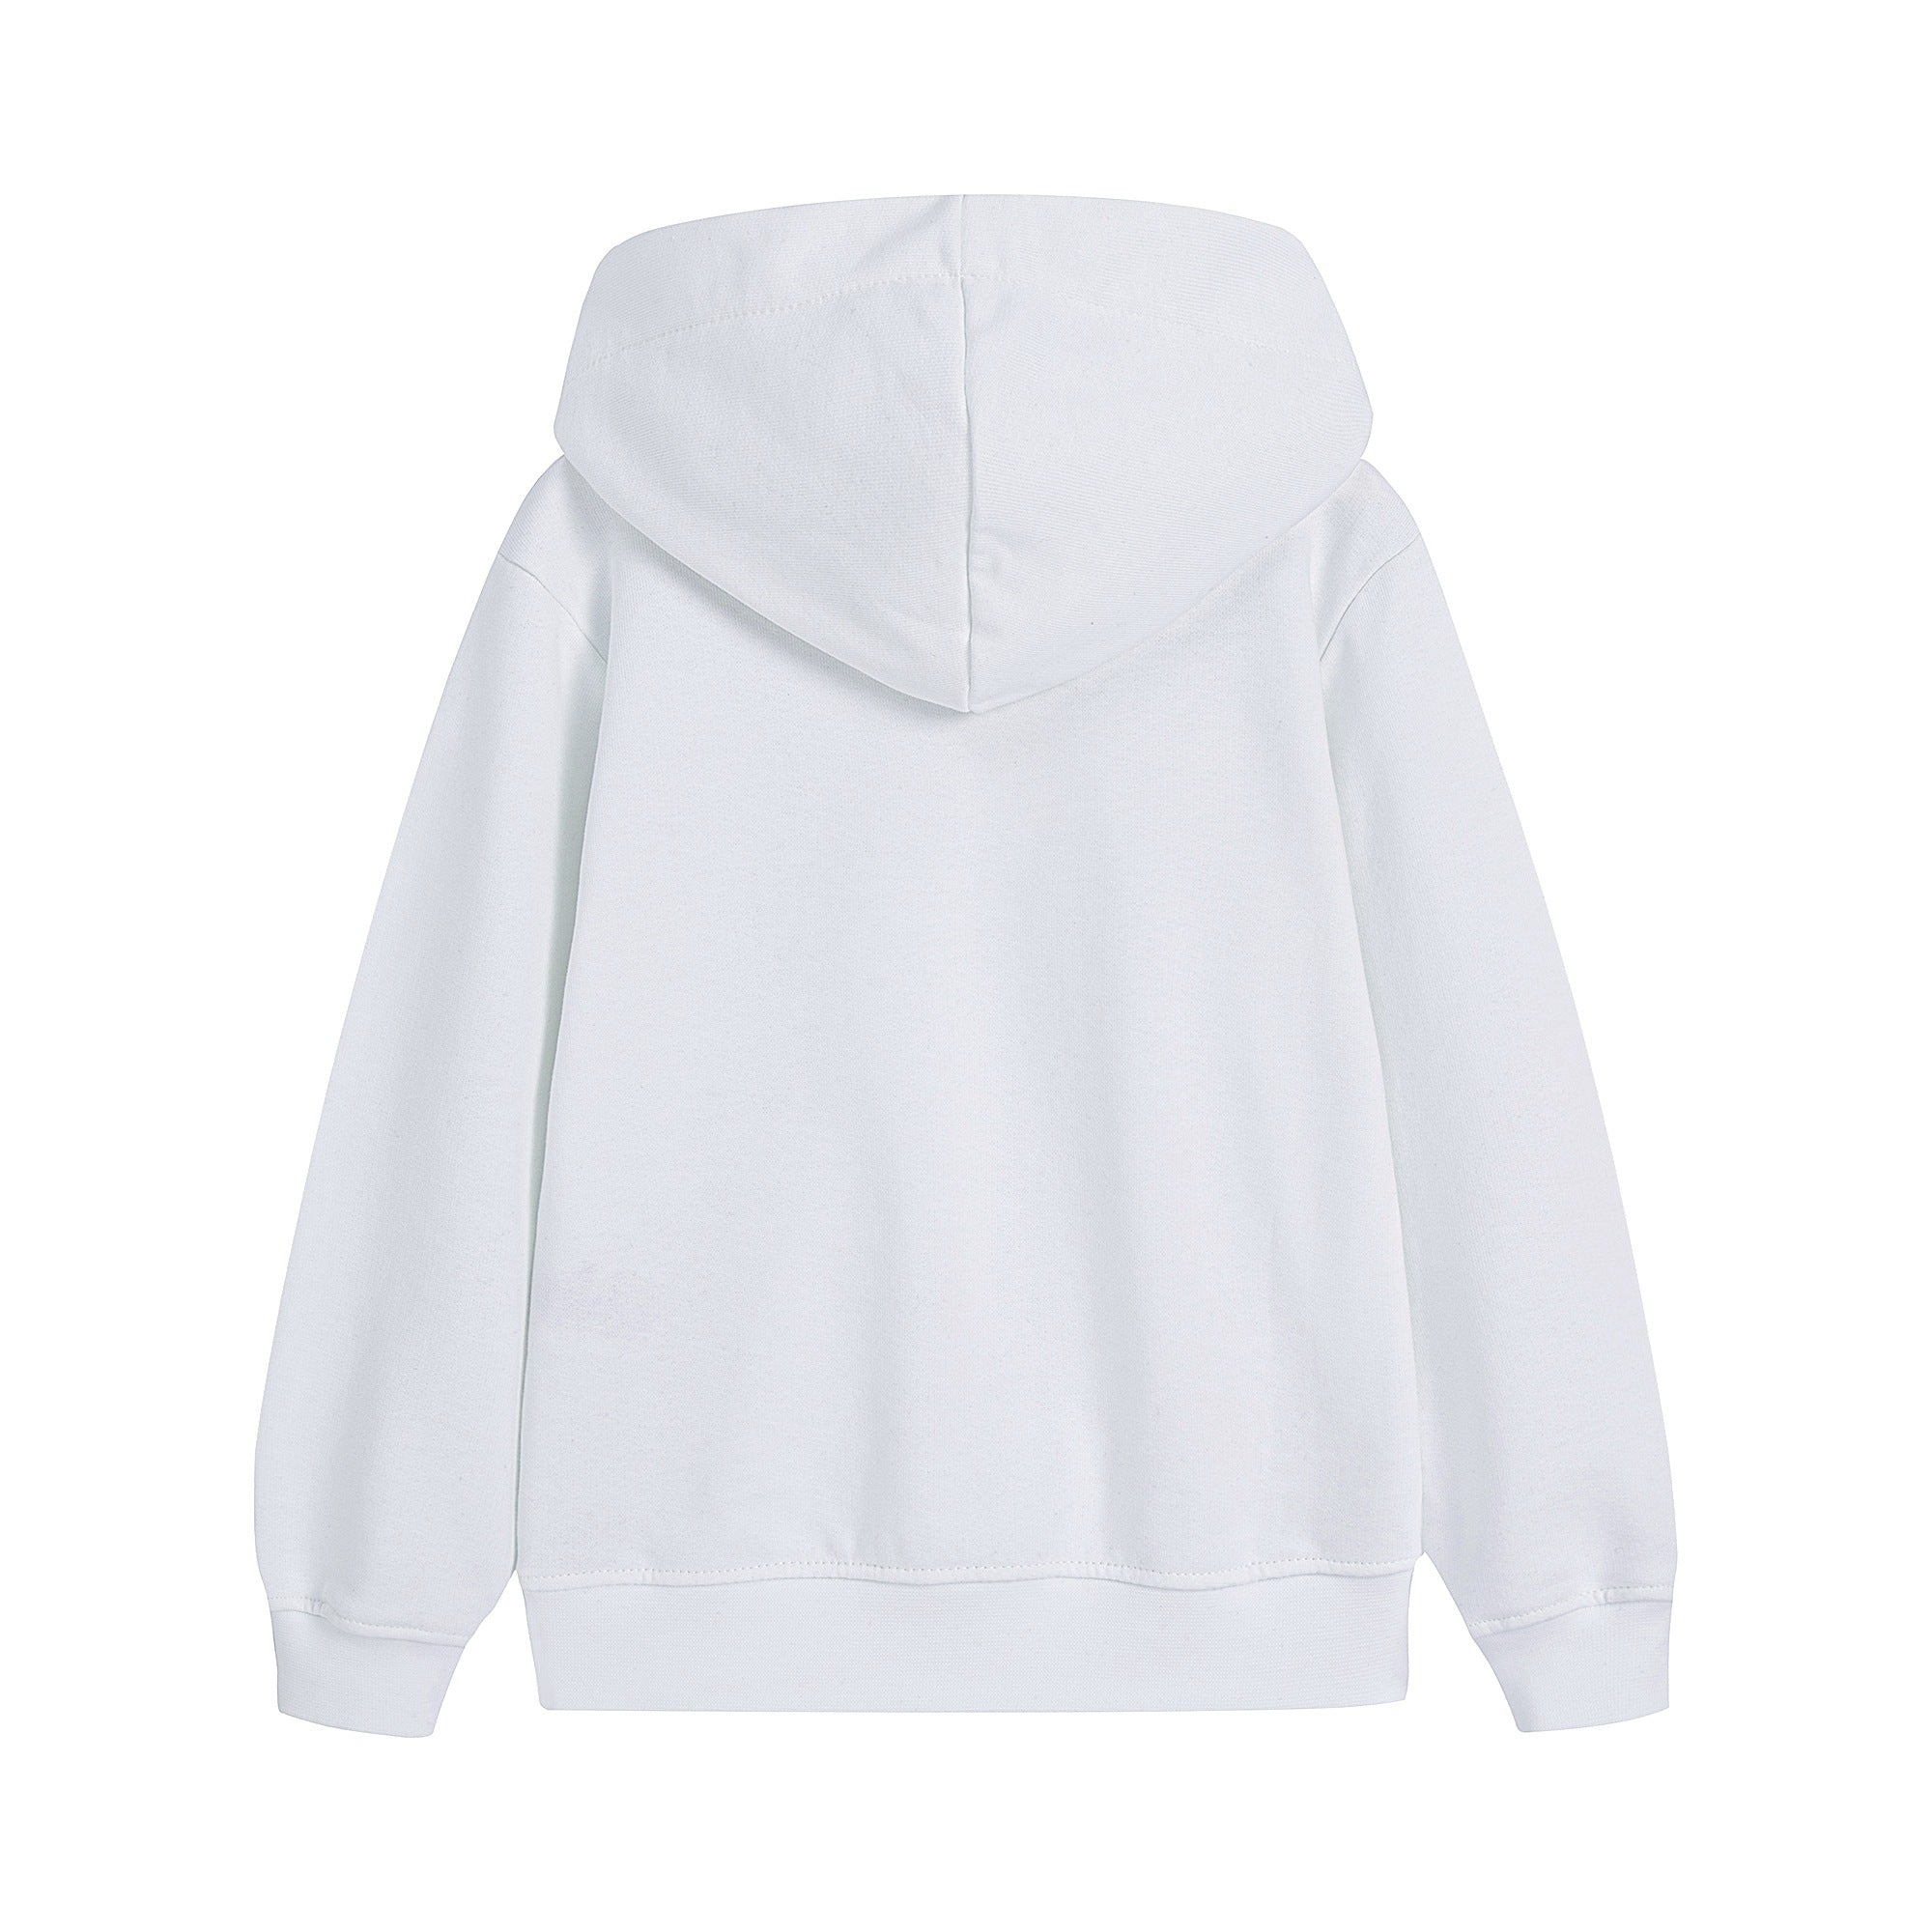 Boys & Girls White Hooded Sweatshirt